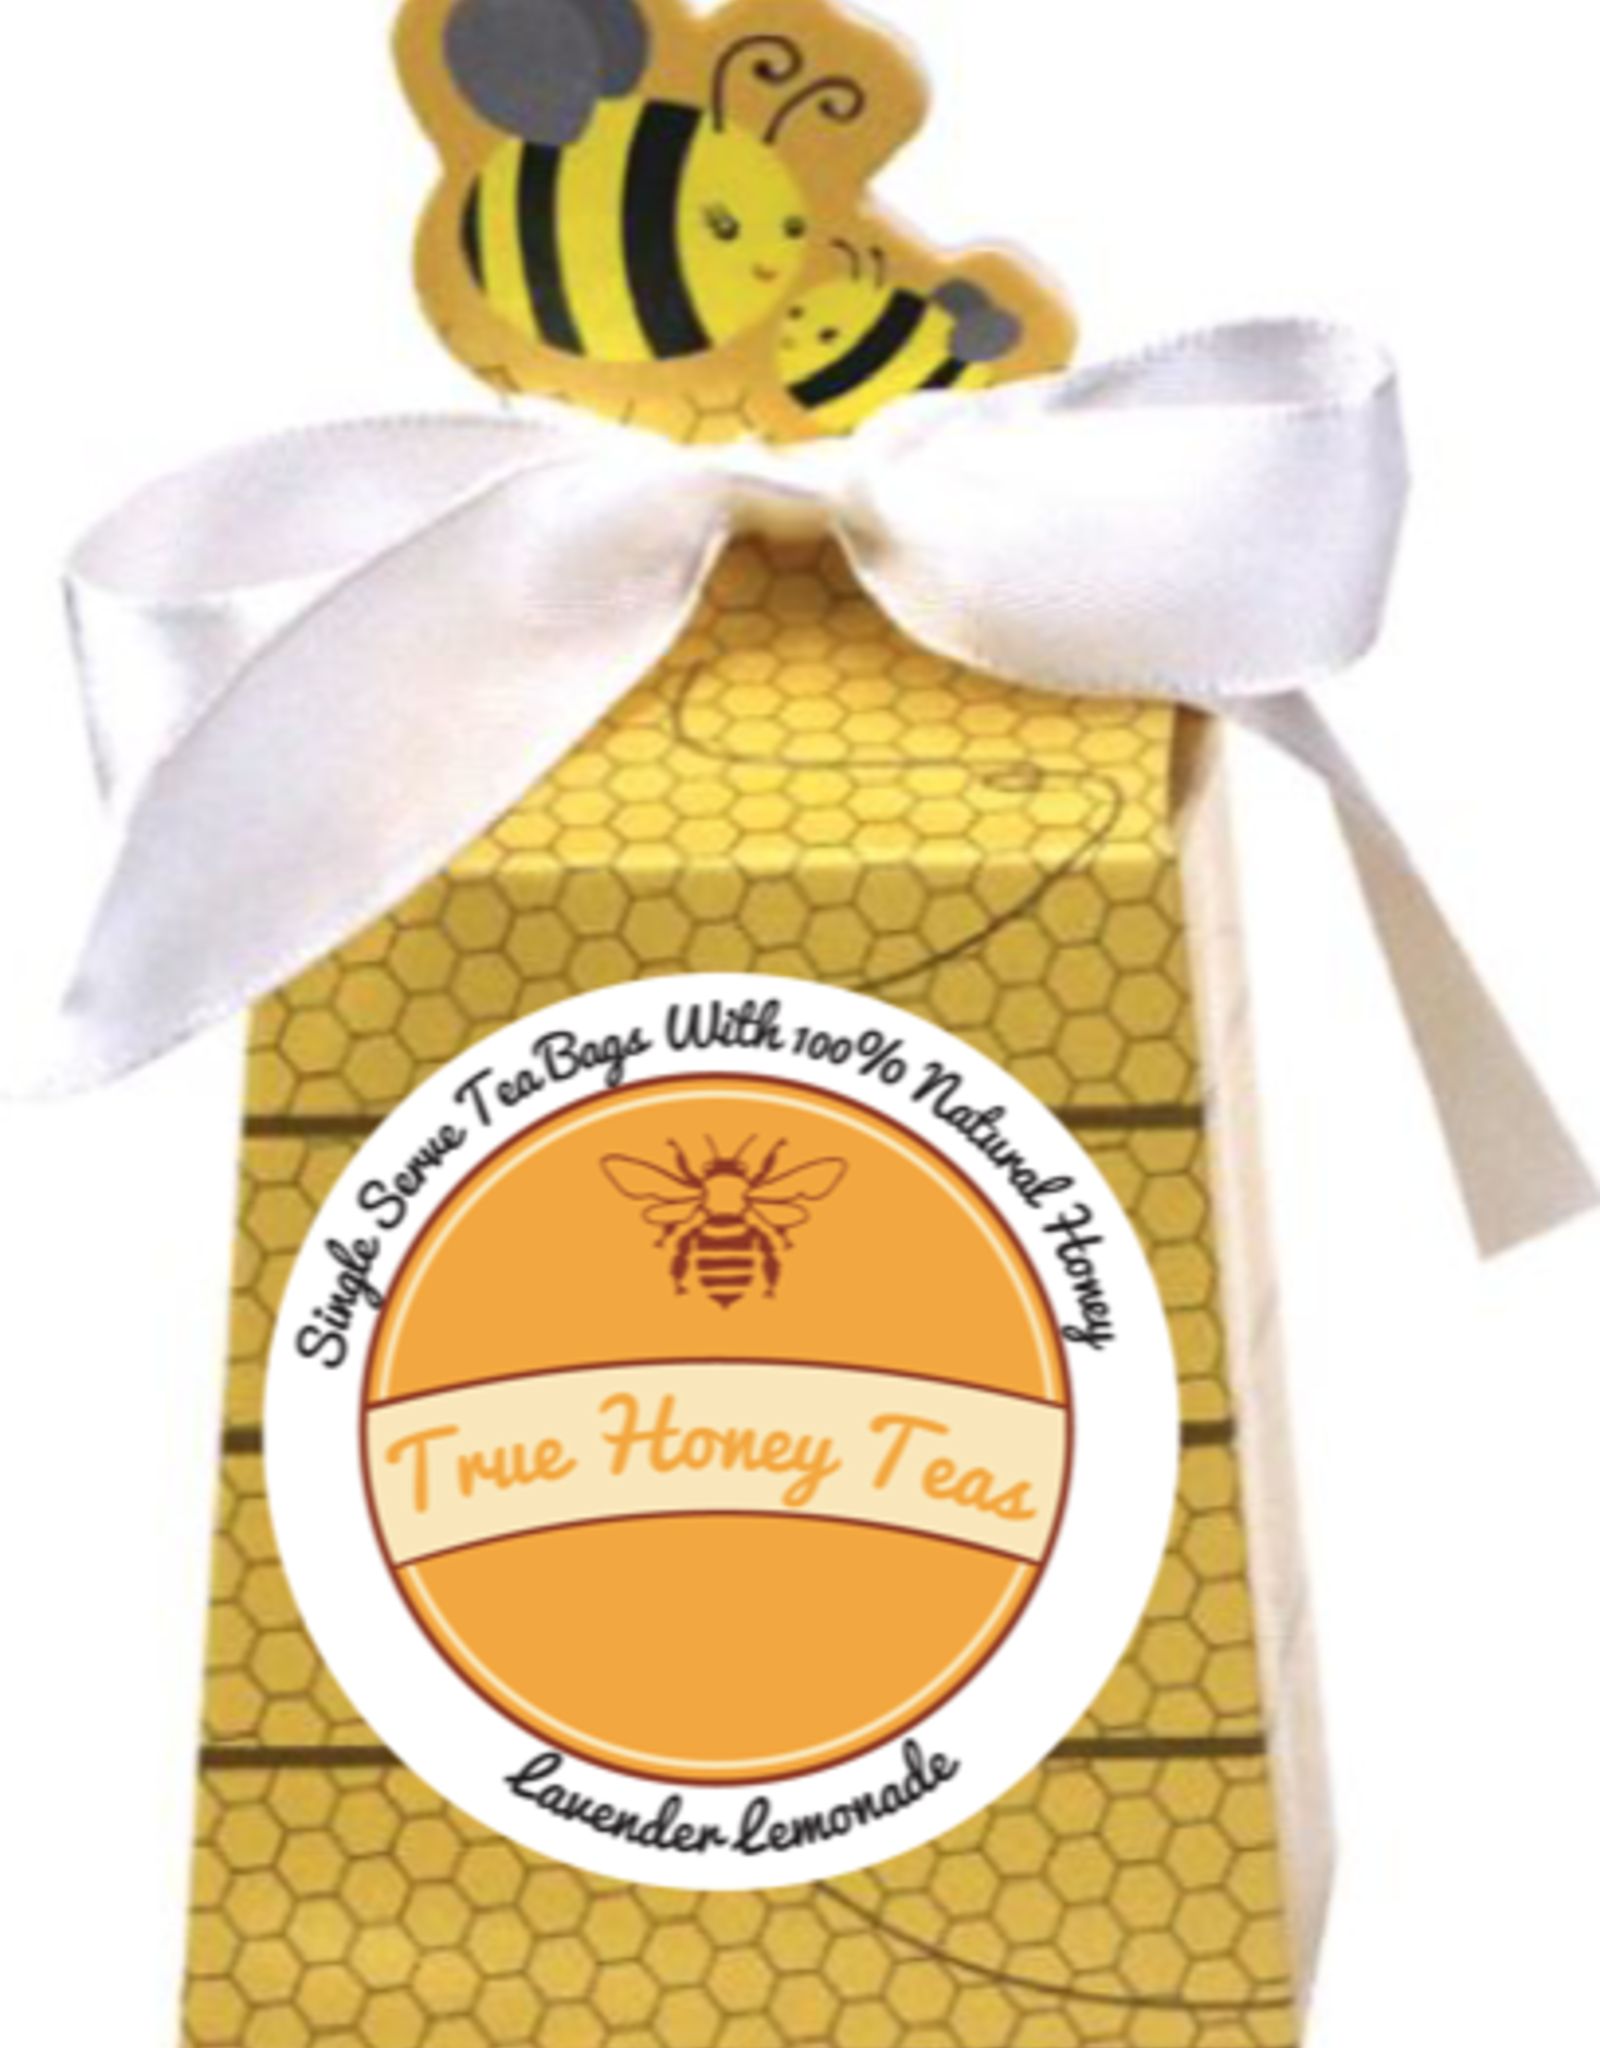 True Honey Teas - Lavender Lemonade Bee Box